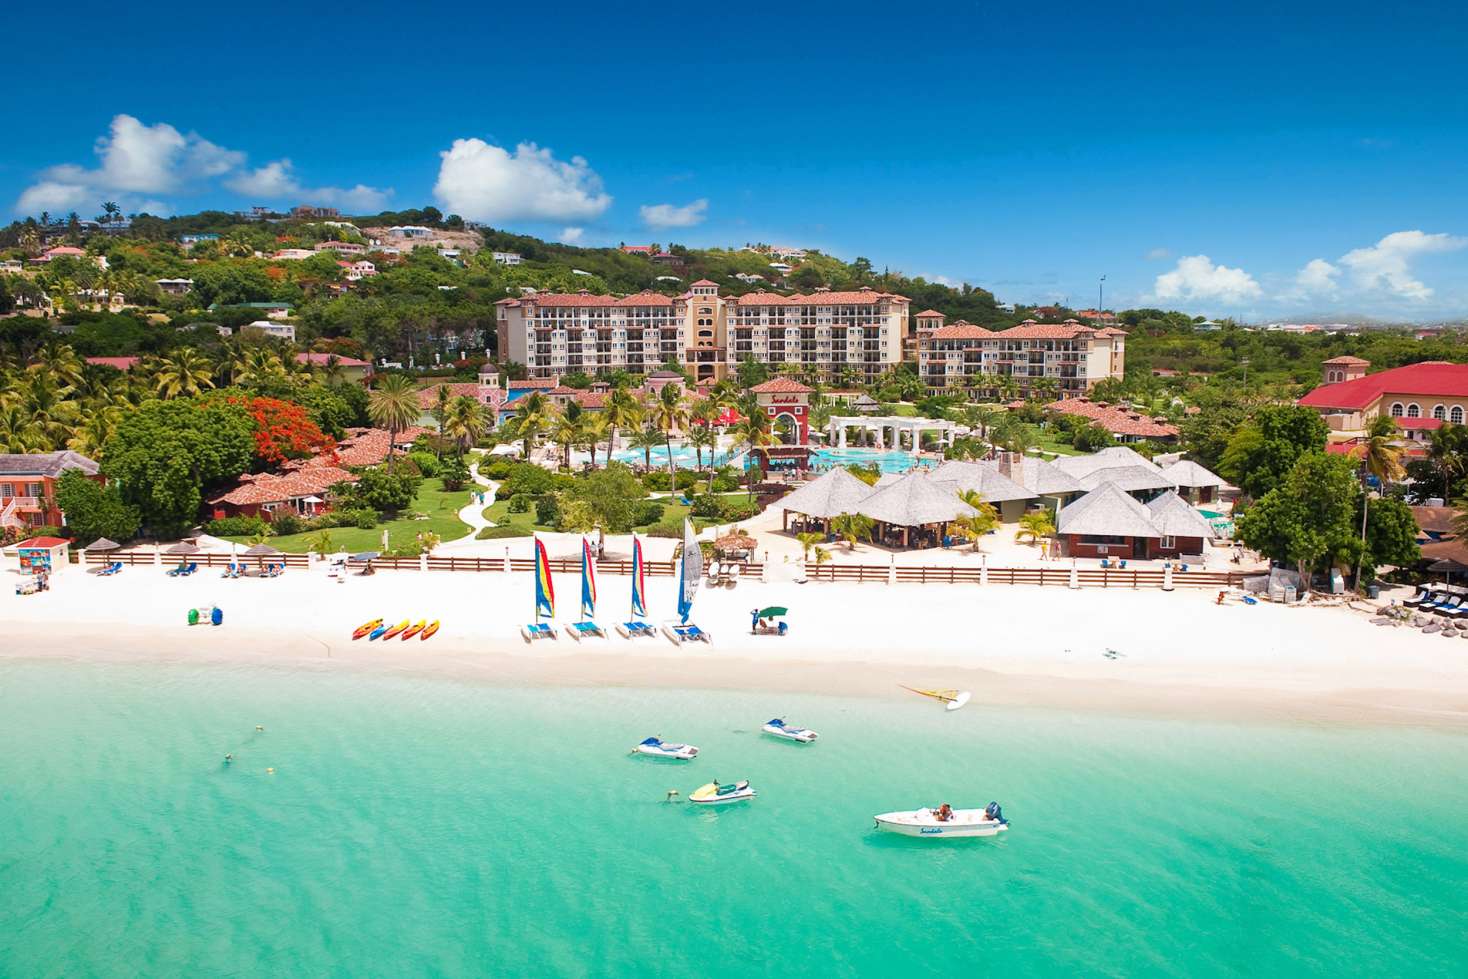 Sandals Grande Antigua Resort & Spa, Saint John's, Antigua Caribbean